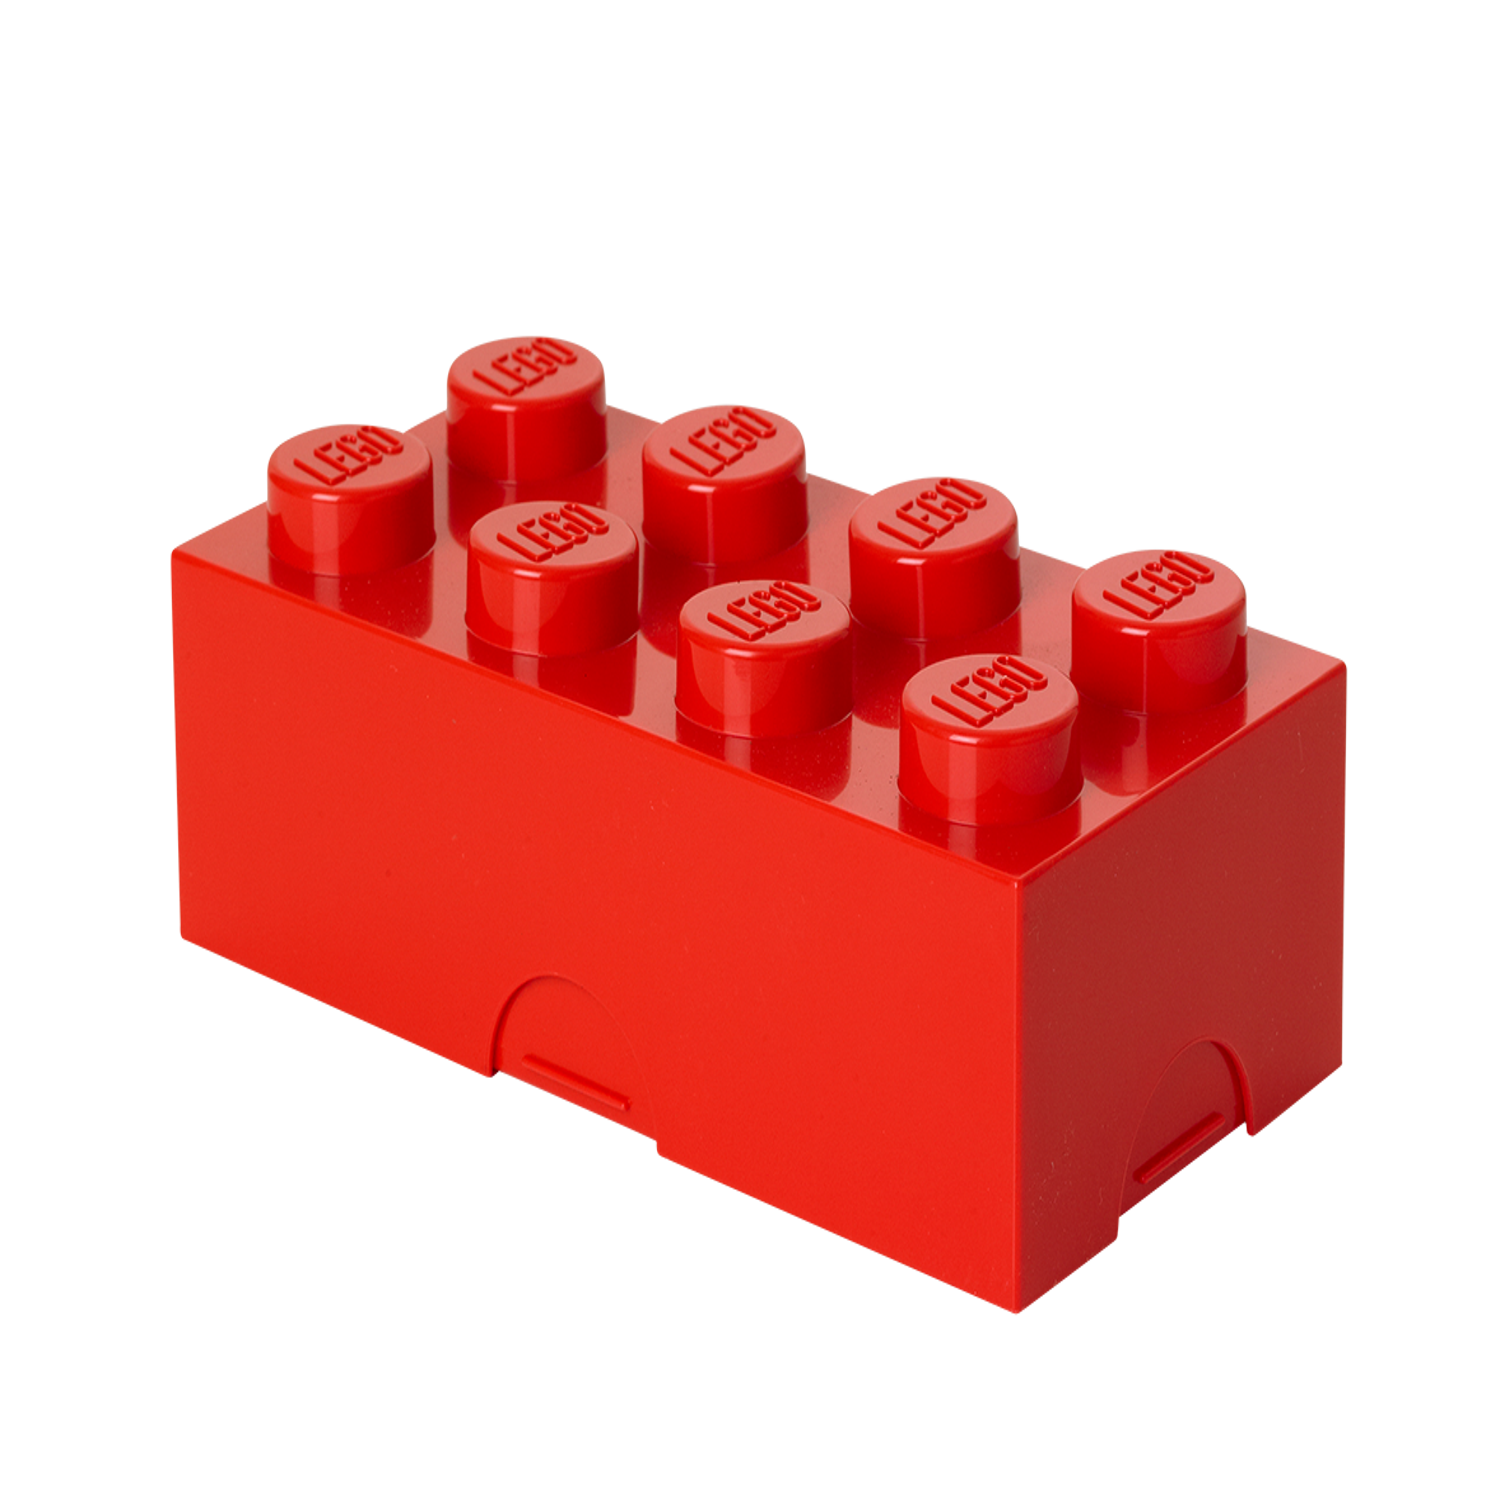 Caja de Lego  Caja lego, Lego, Cajas